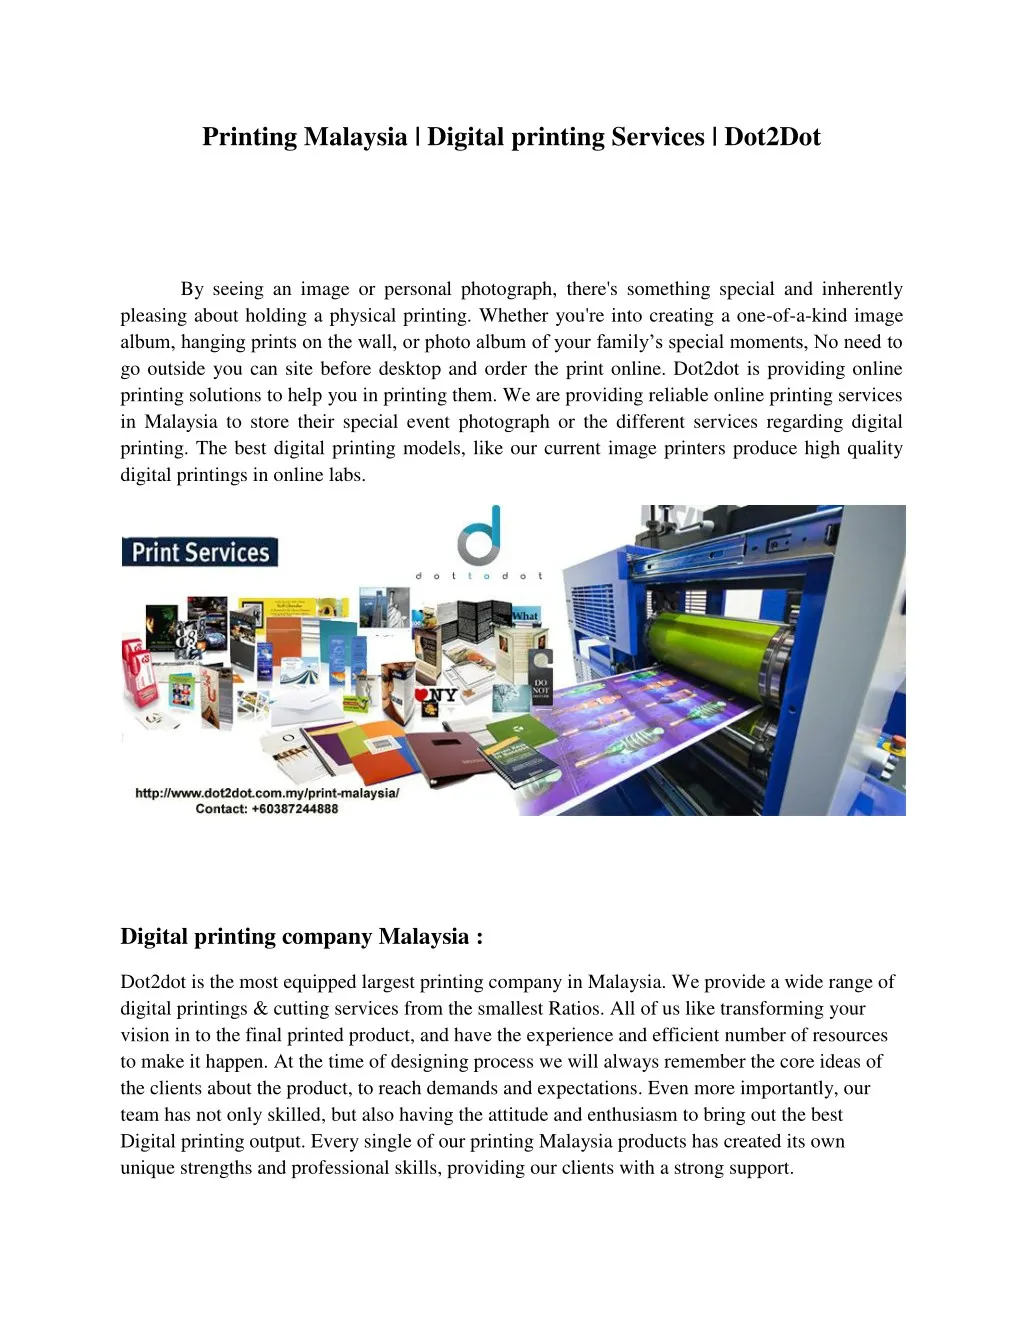 printing malaysia digital printing services